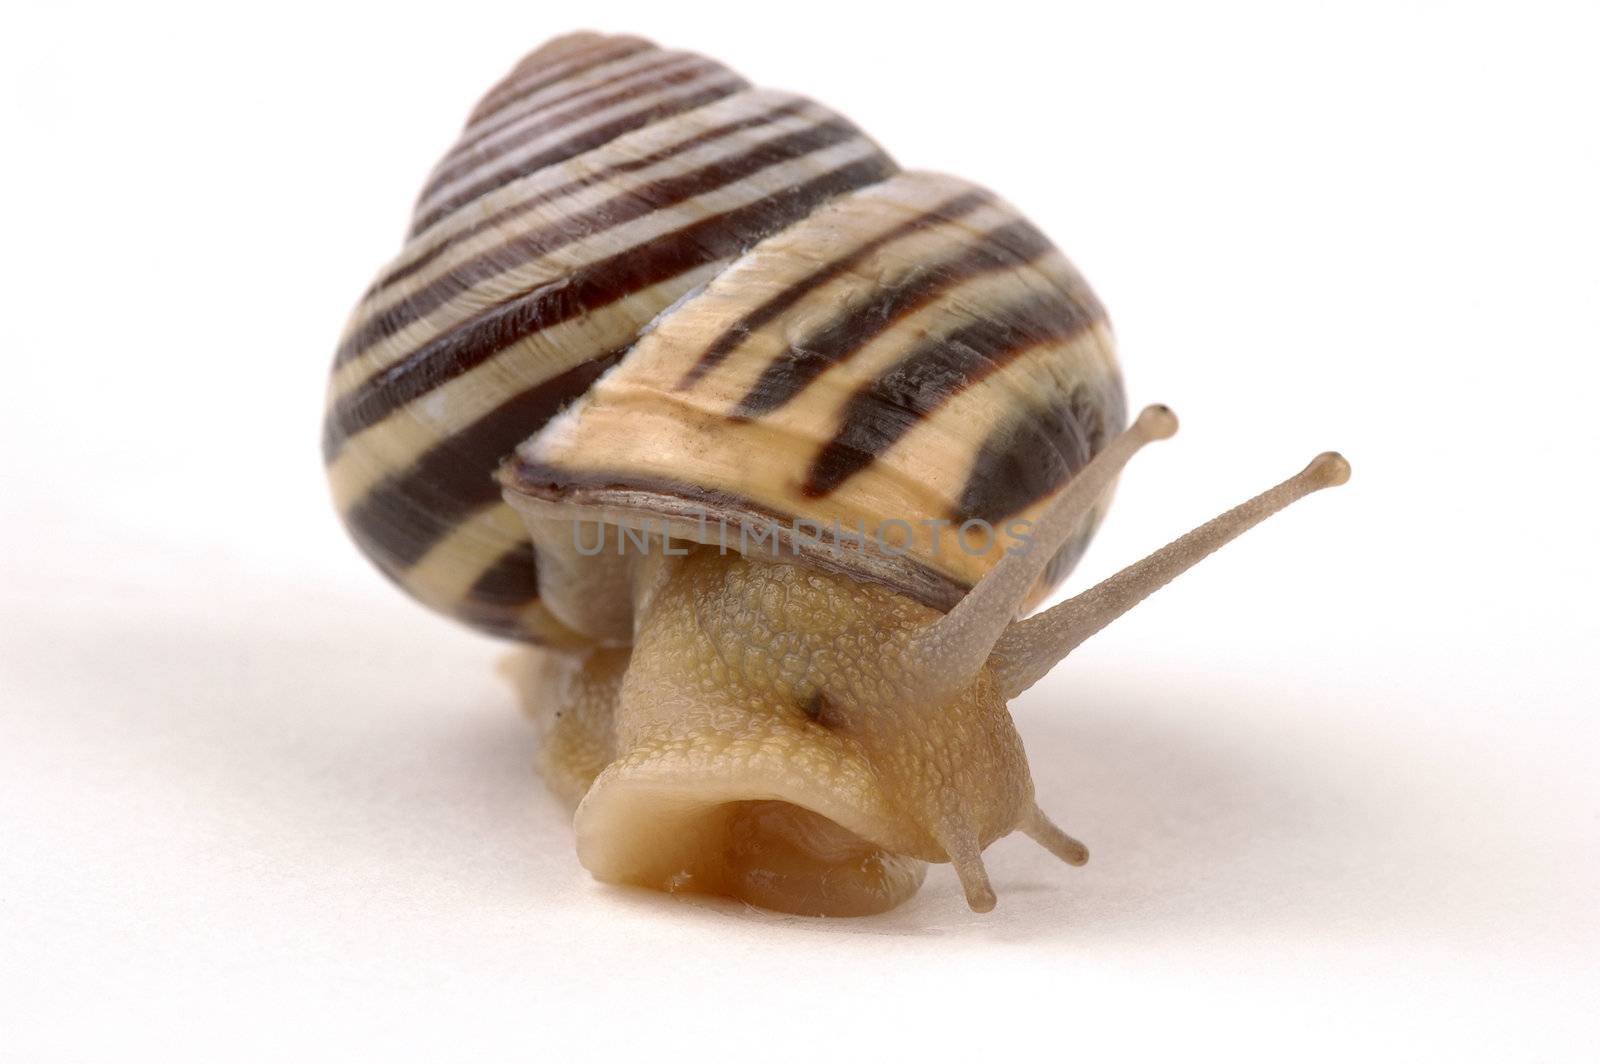 Snail by billberryphotography